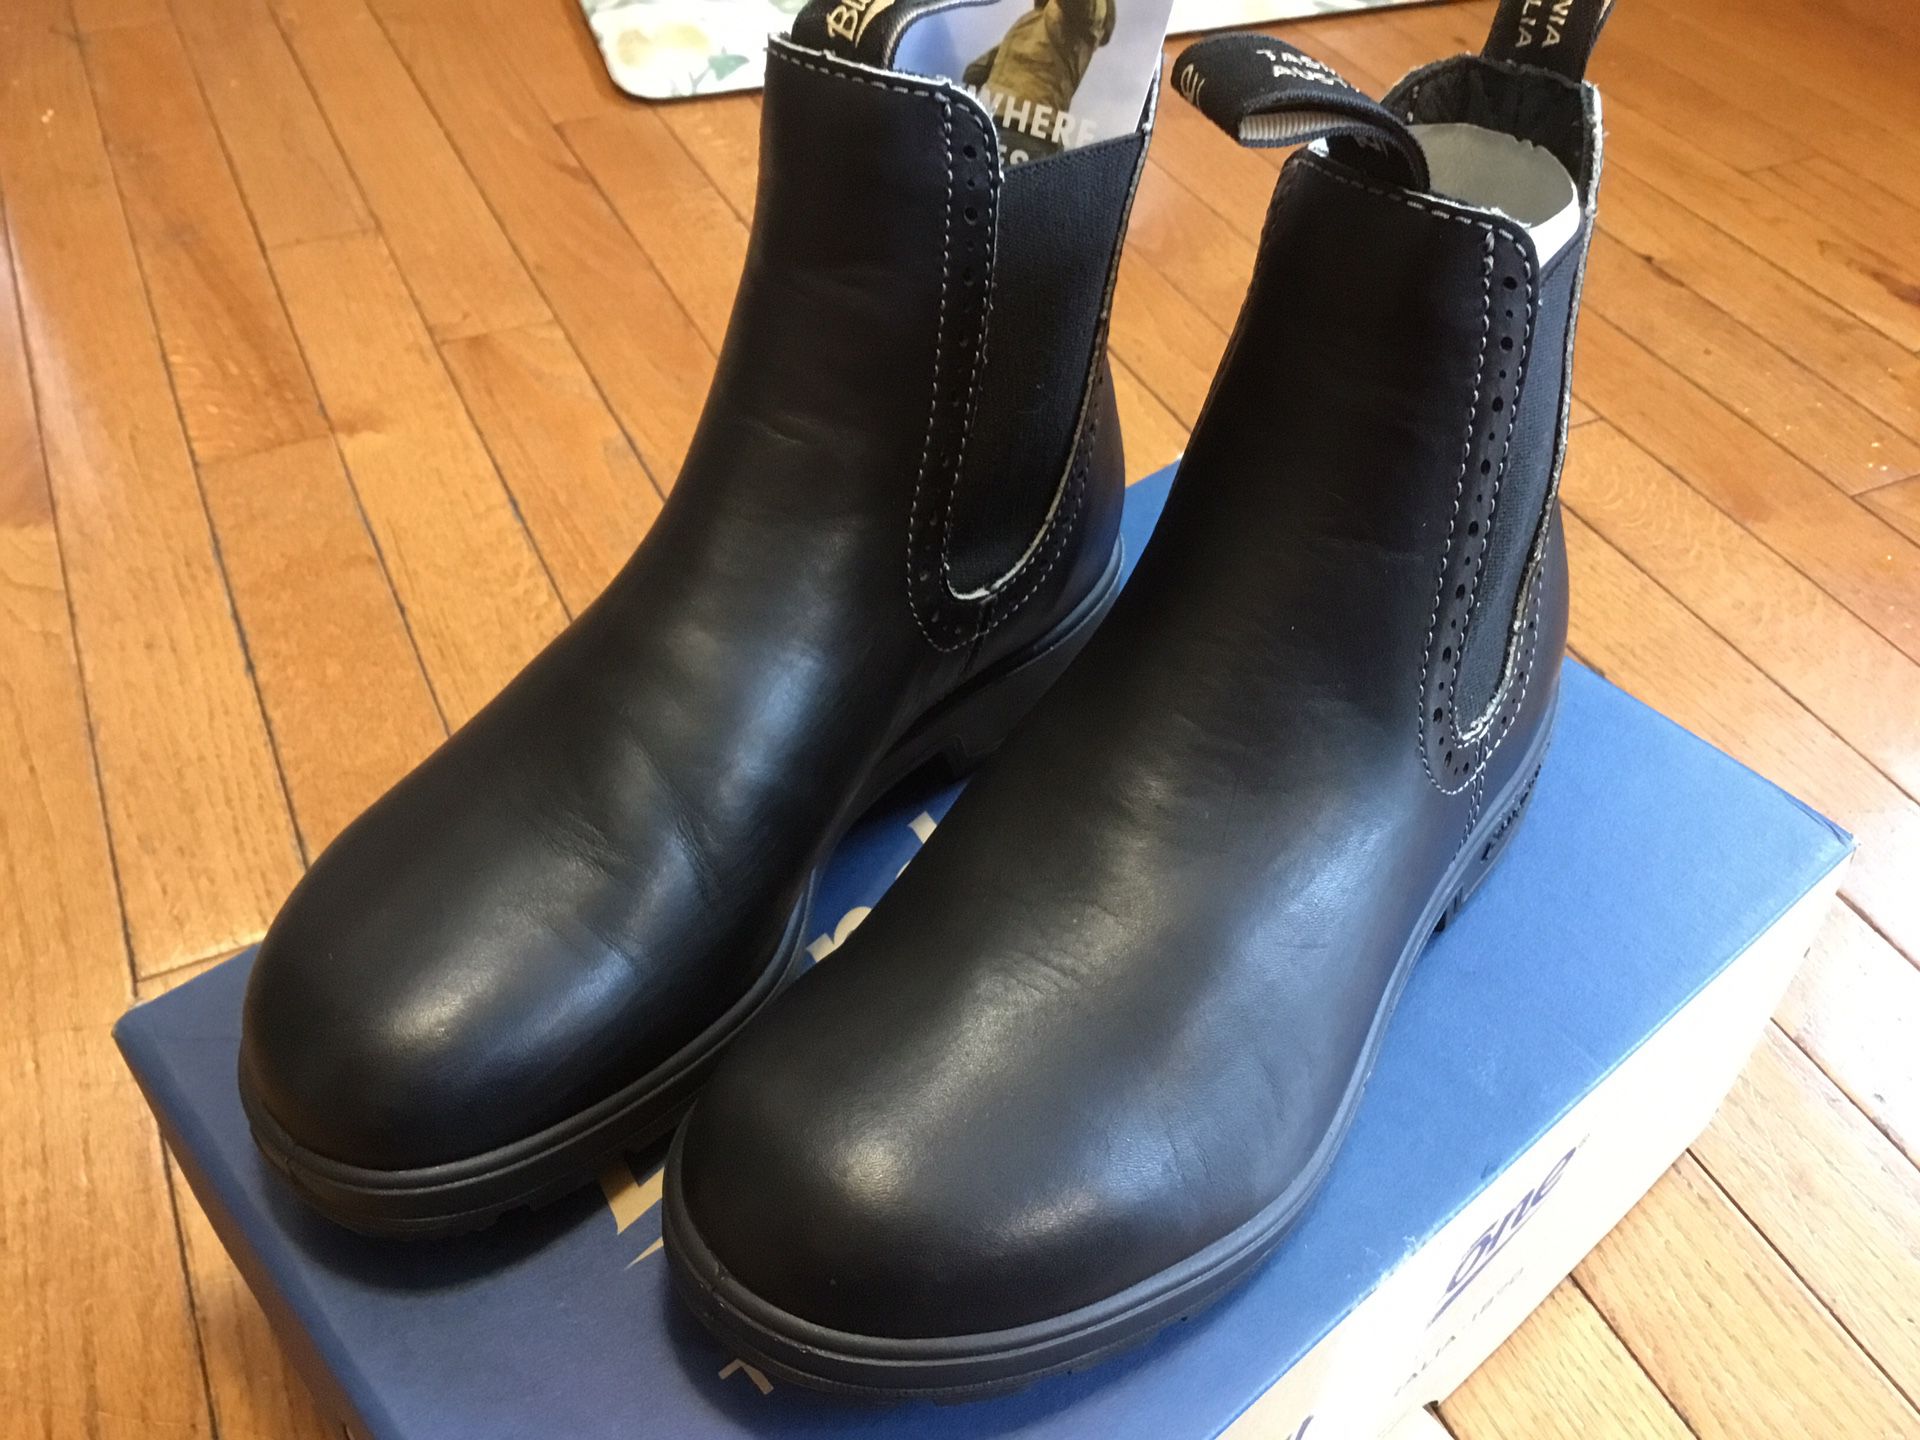 Blundstone Voltan black premium water-resistant leather women boots. Model 1448, AUS/UK size 4.5 equivalent to 7.5 women’s US size.